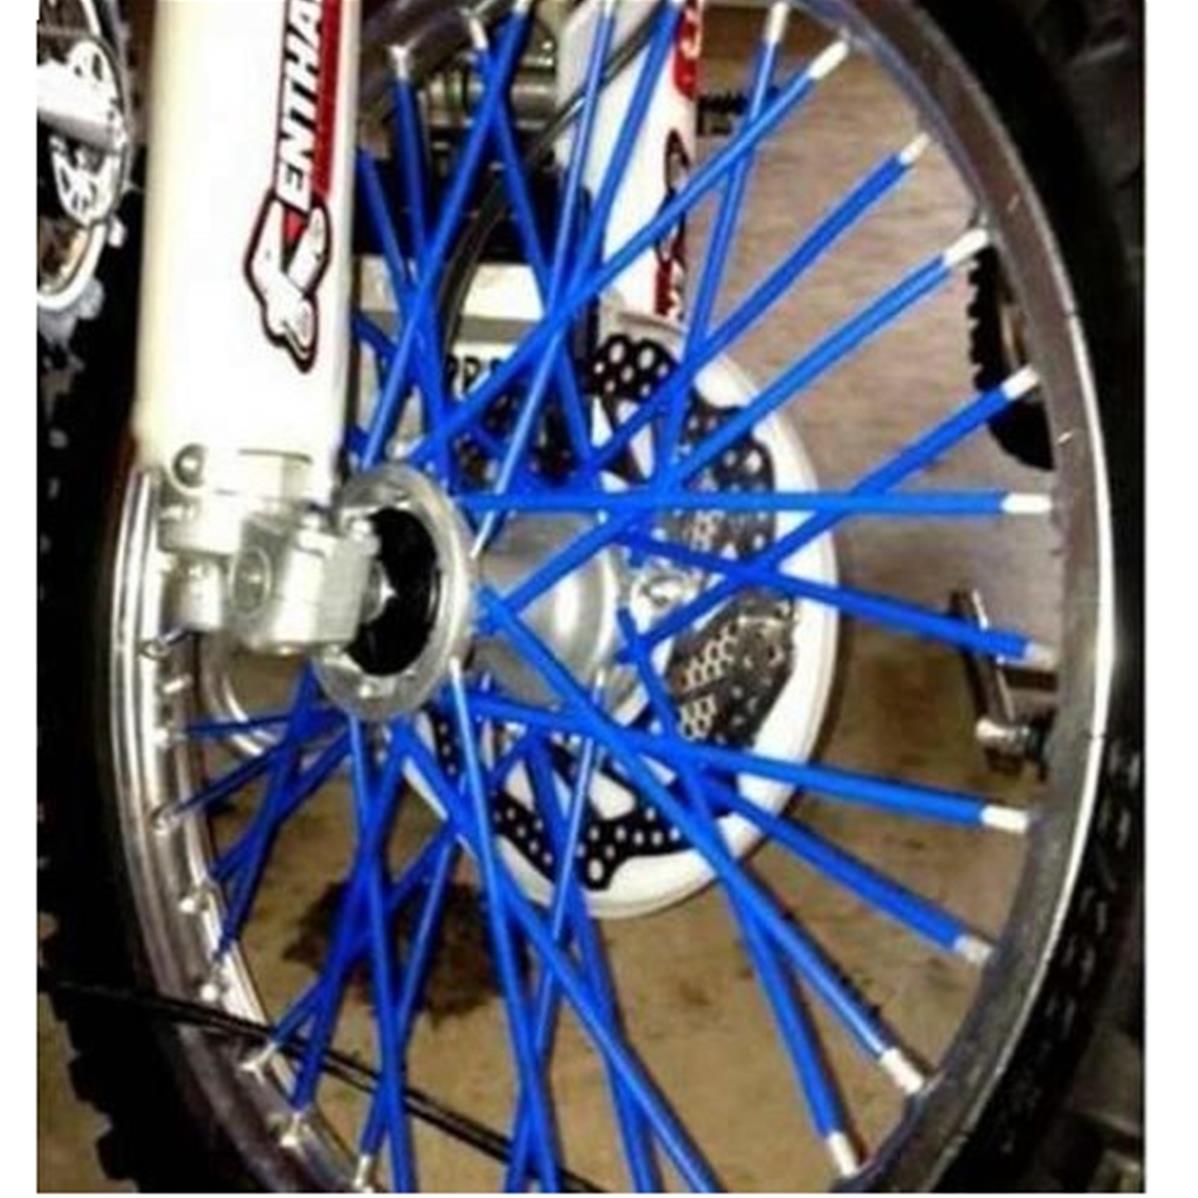 Enjoliveur de rayon bleu pour mecaboite ou moto - Couvre rayons moto